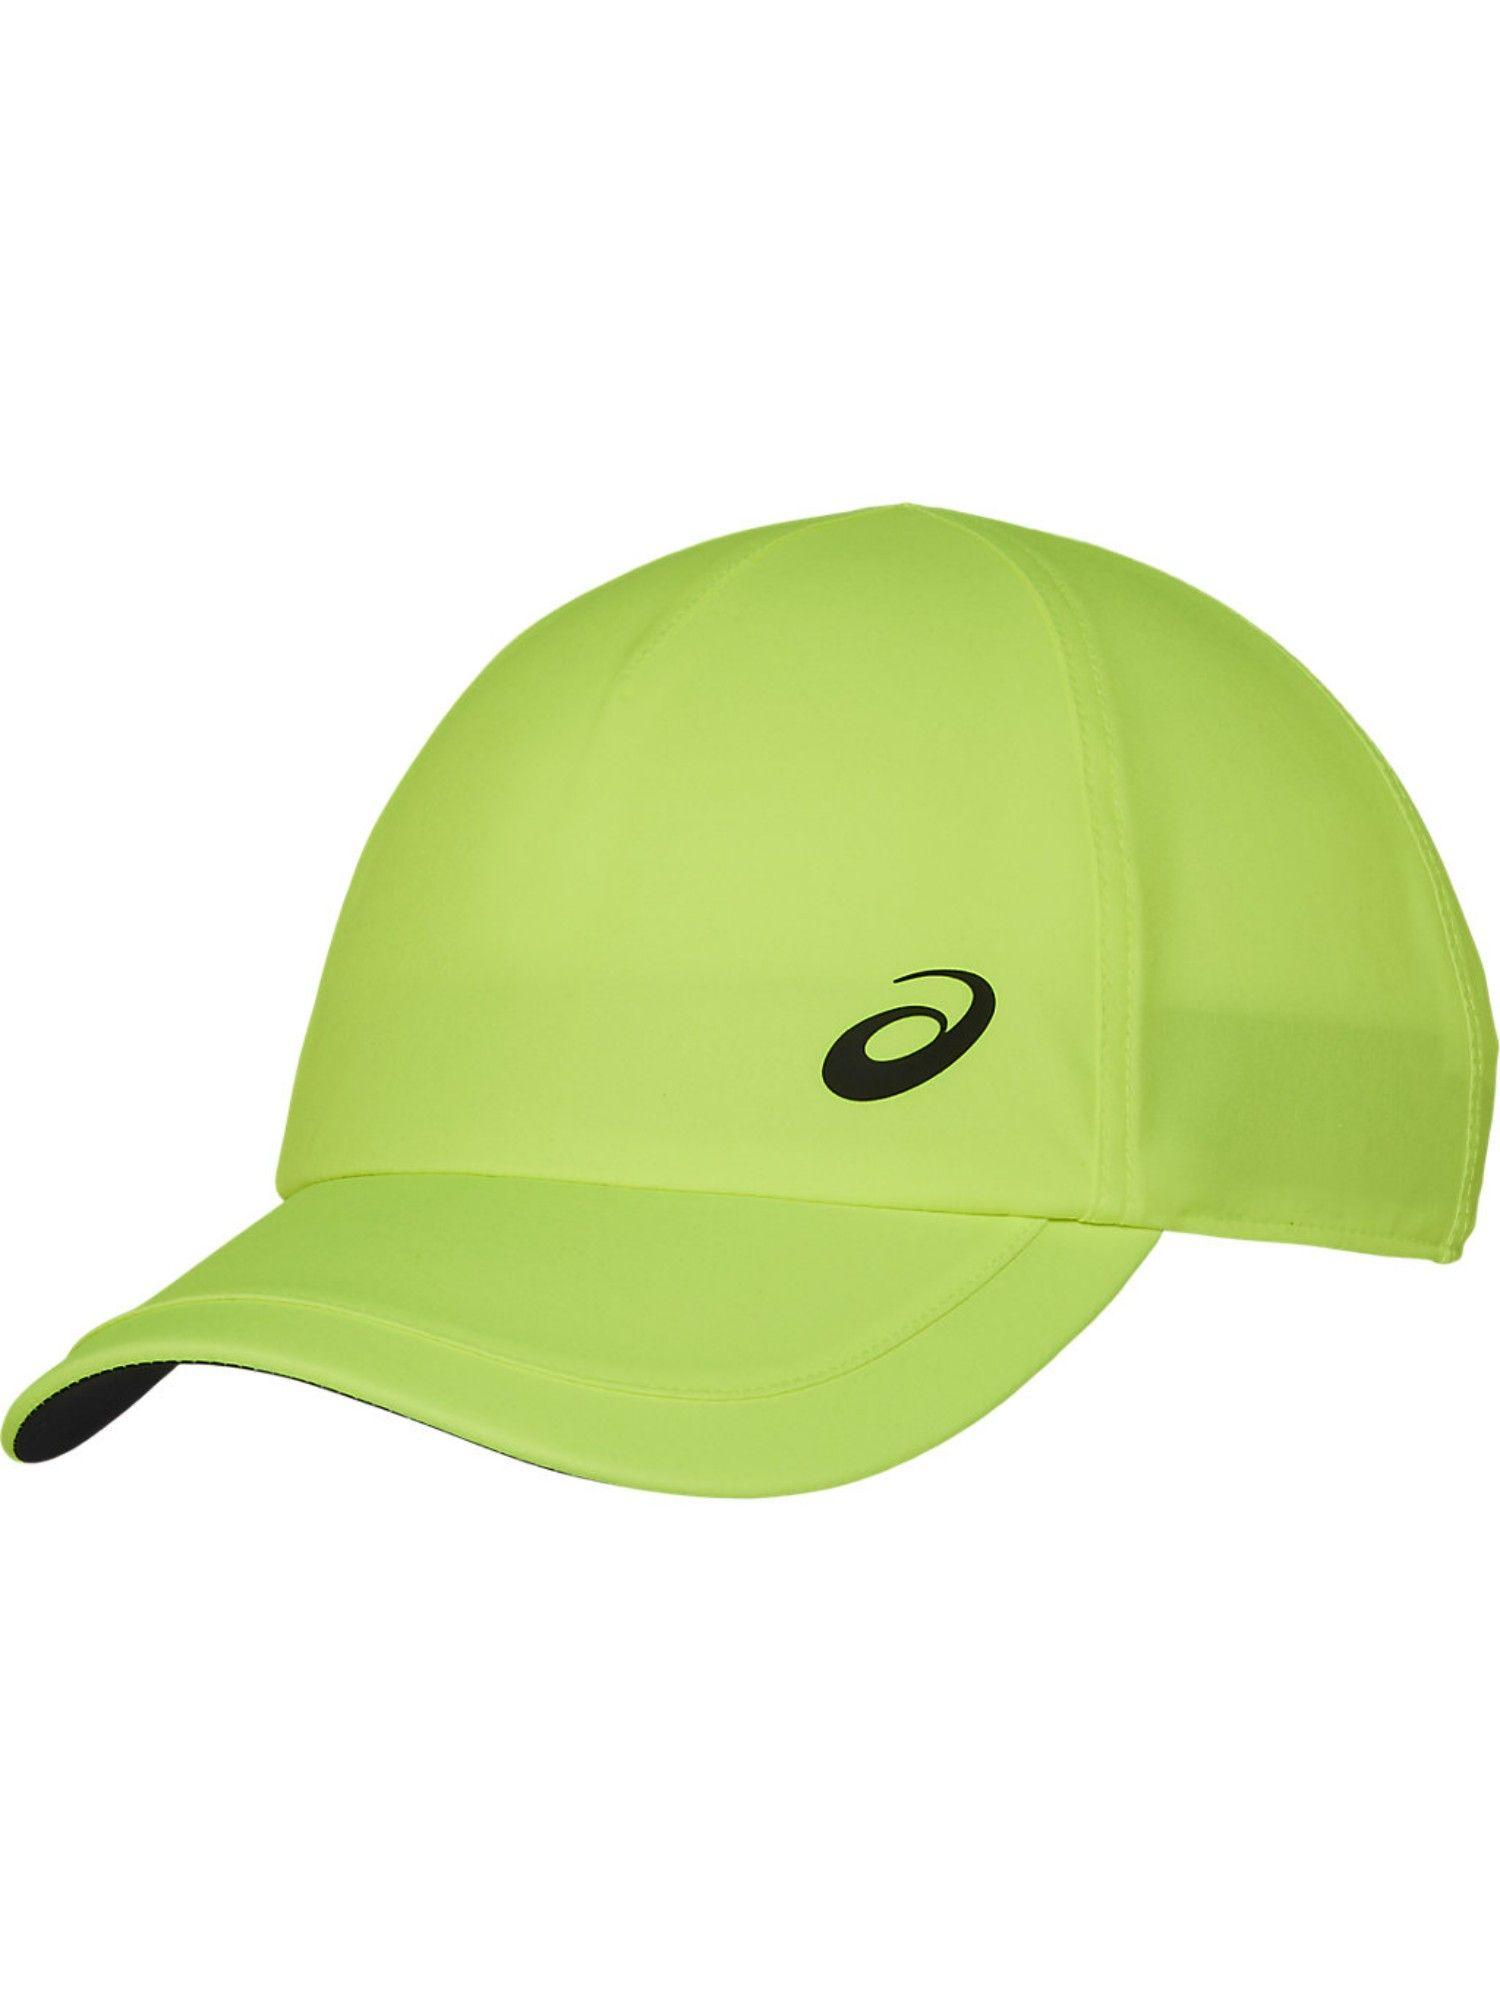 pf green unisex cap